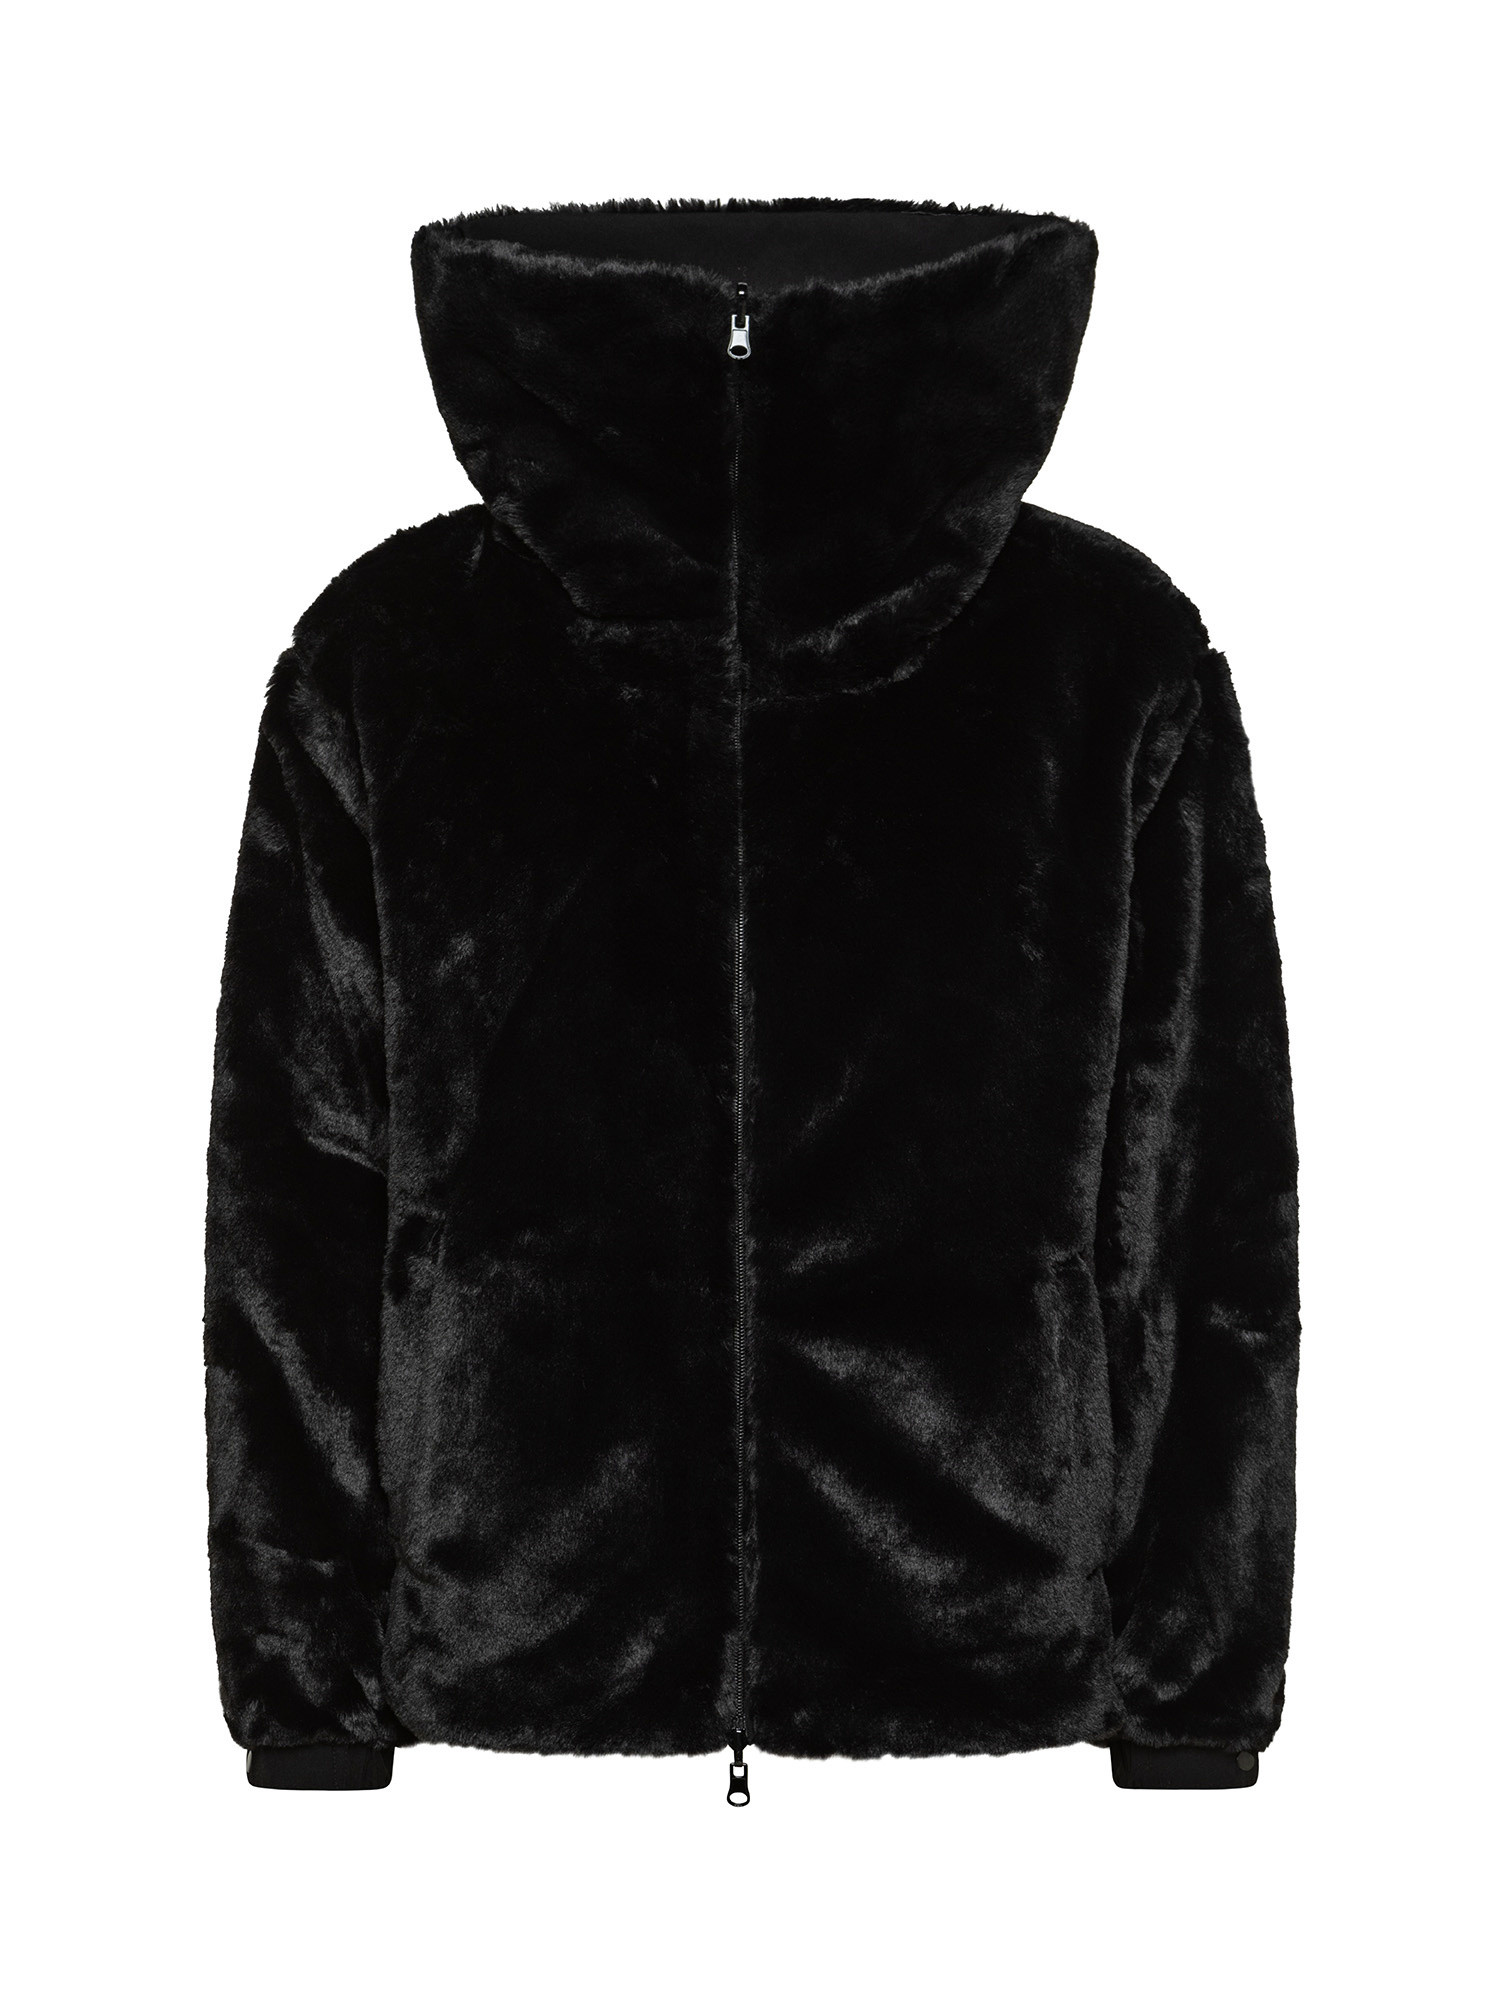 Koan - Reversible jacket, Black, large image number 0